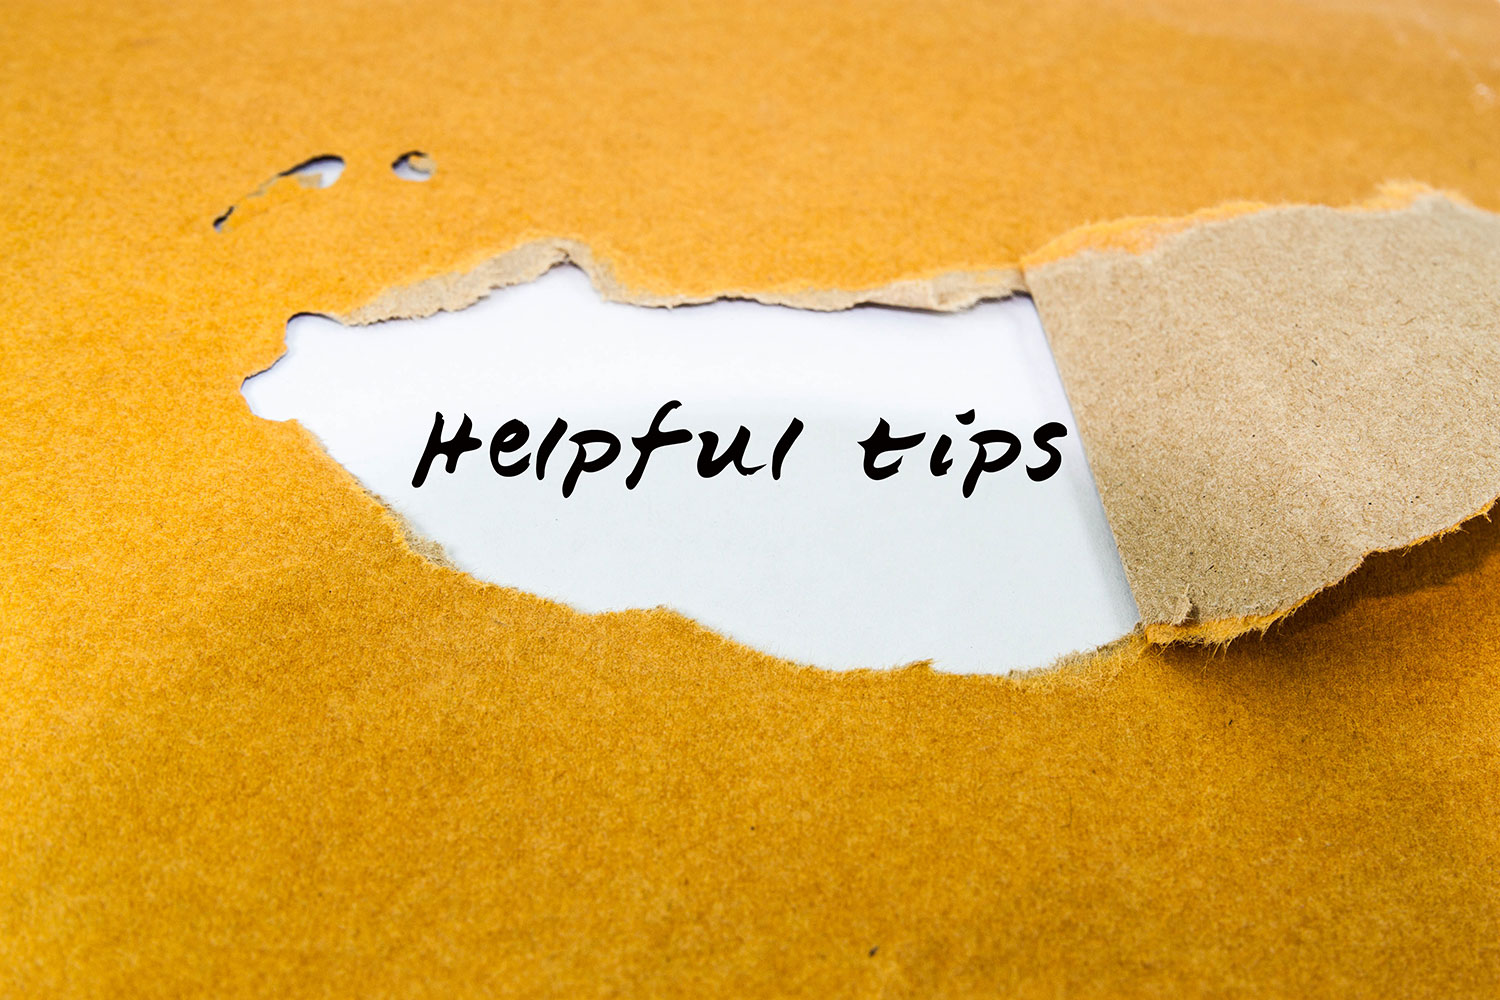 Helpful tips under yellow paper